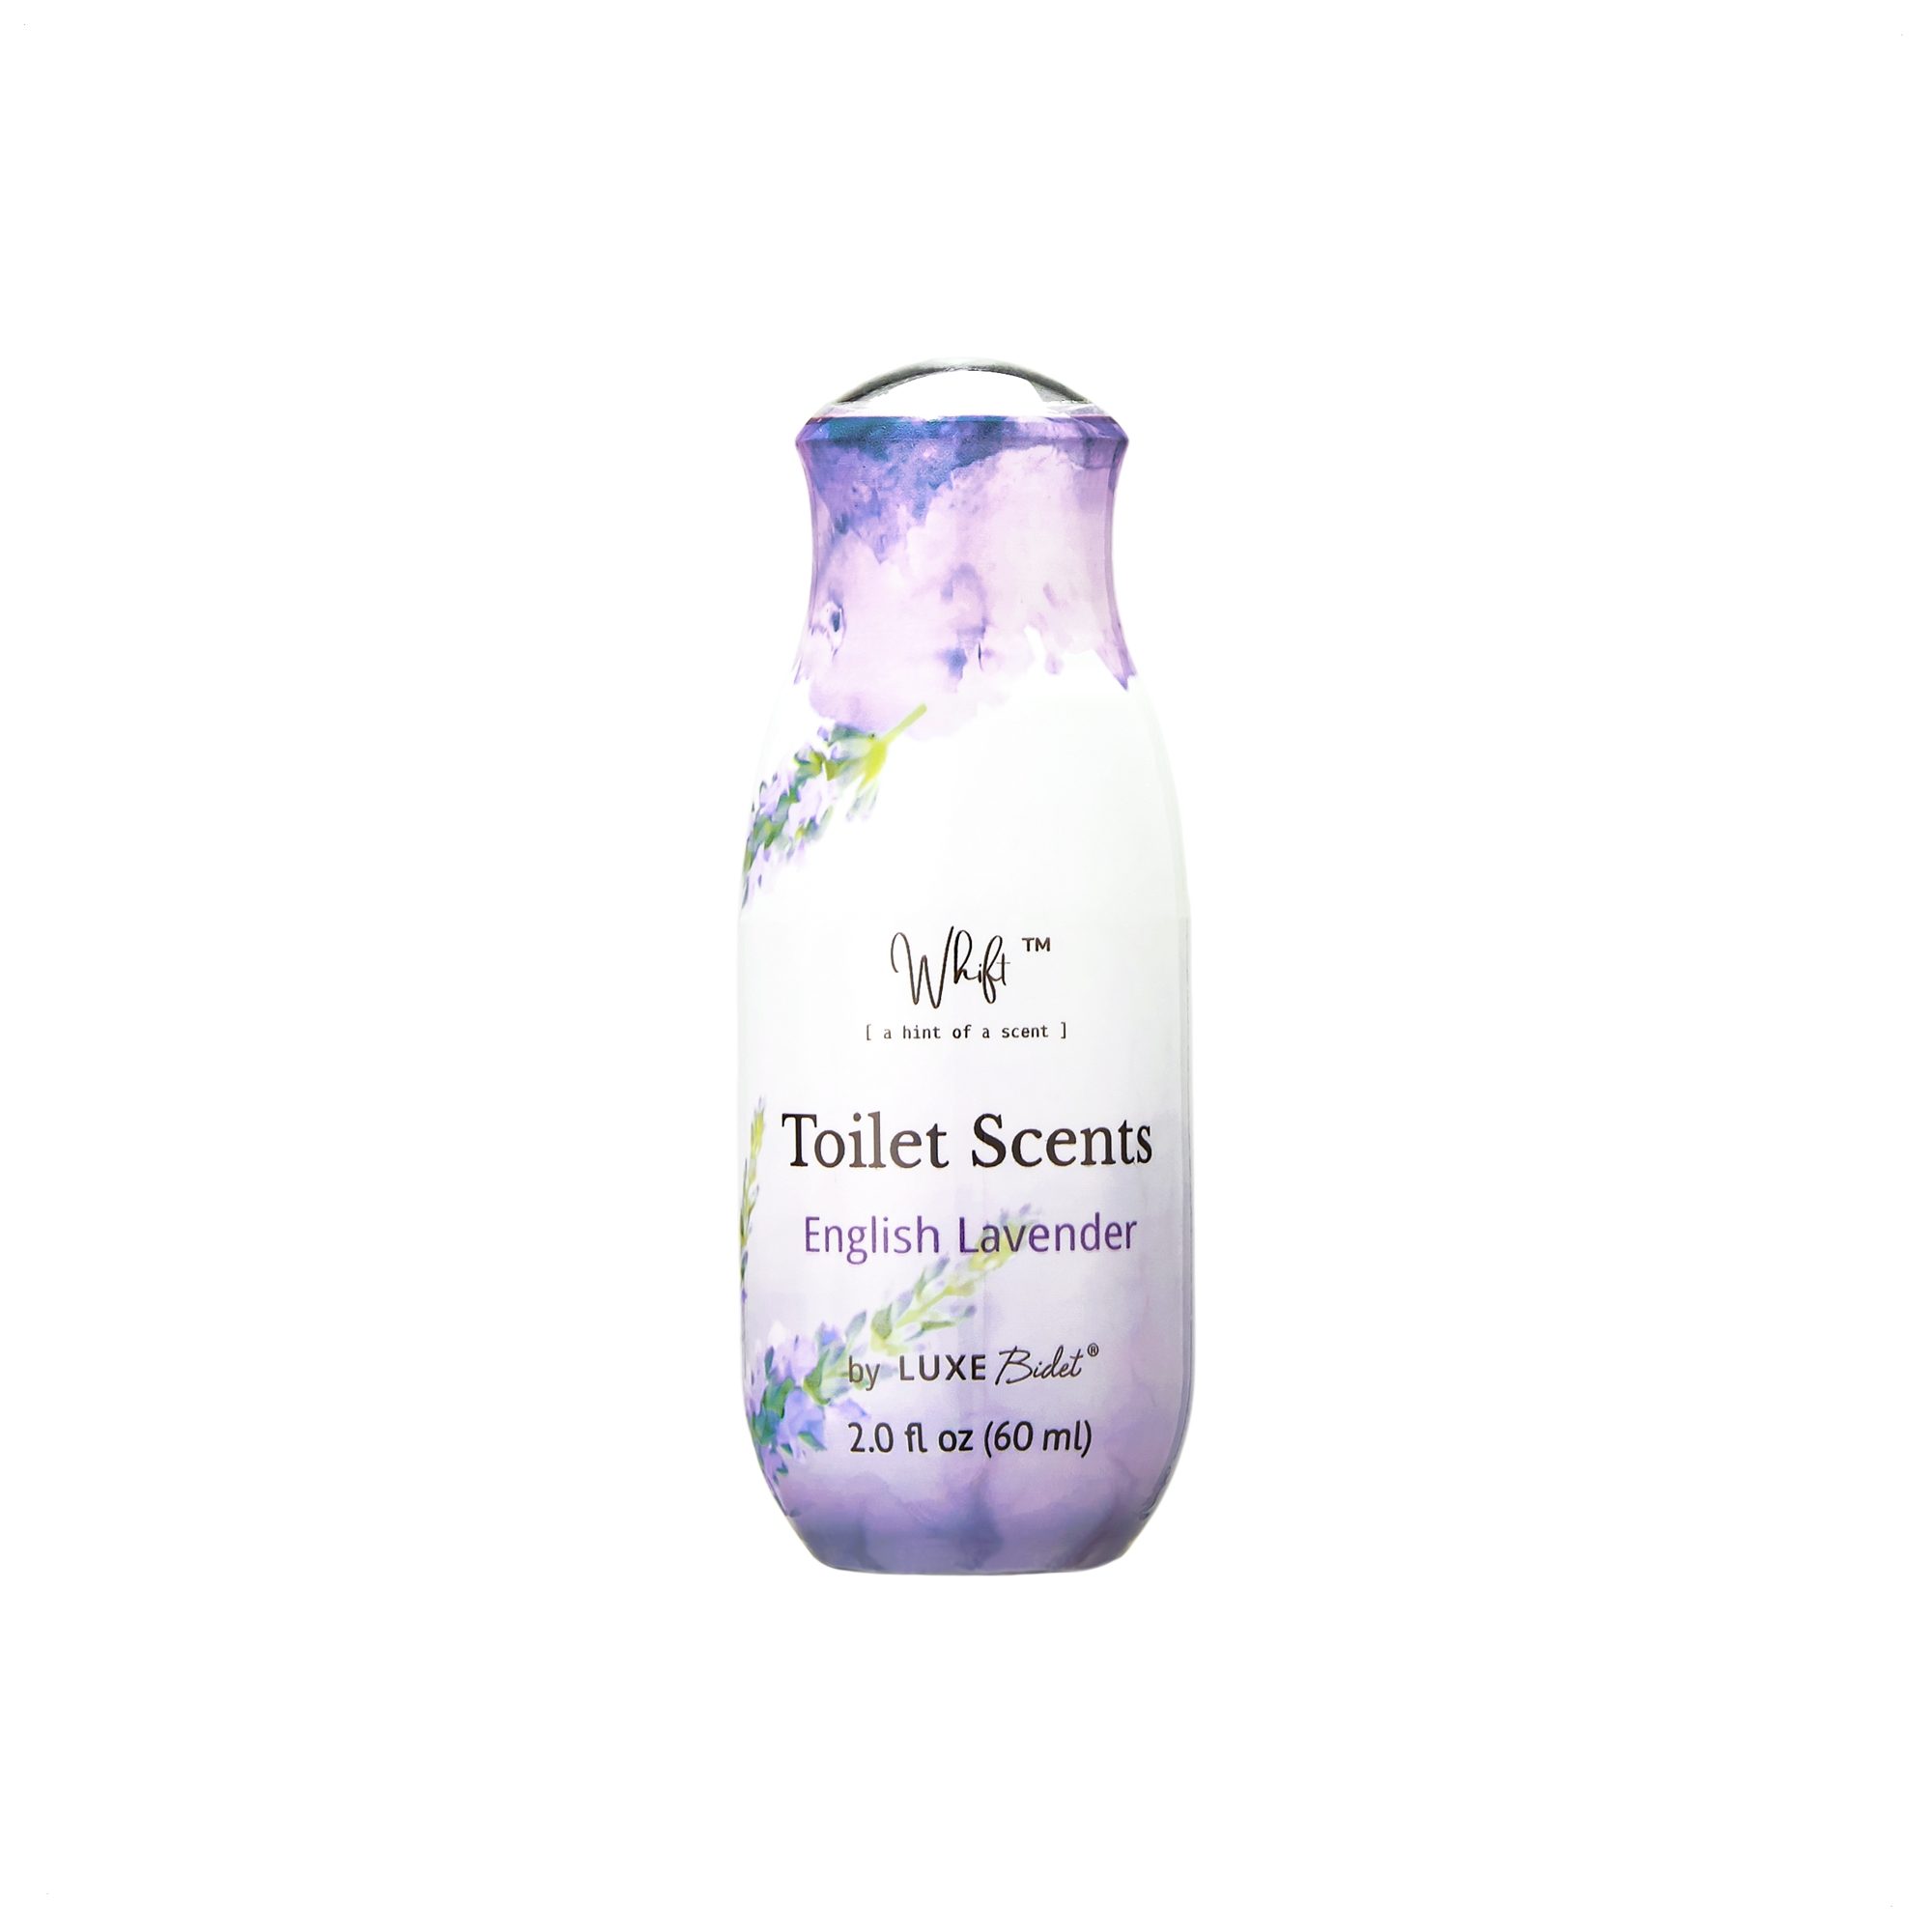 English Lavender Spray 60 ml Whift Toilet Scents Spray (กลิ่น อิงลิช ลาเวนเดอร์ แบบสเปรย์ 60 มล.)